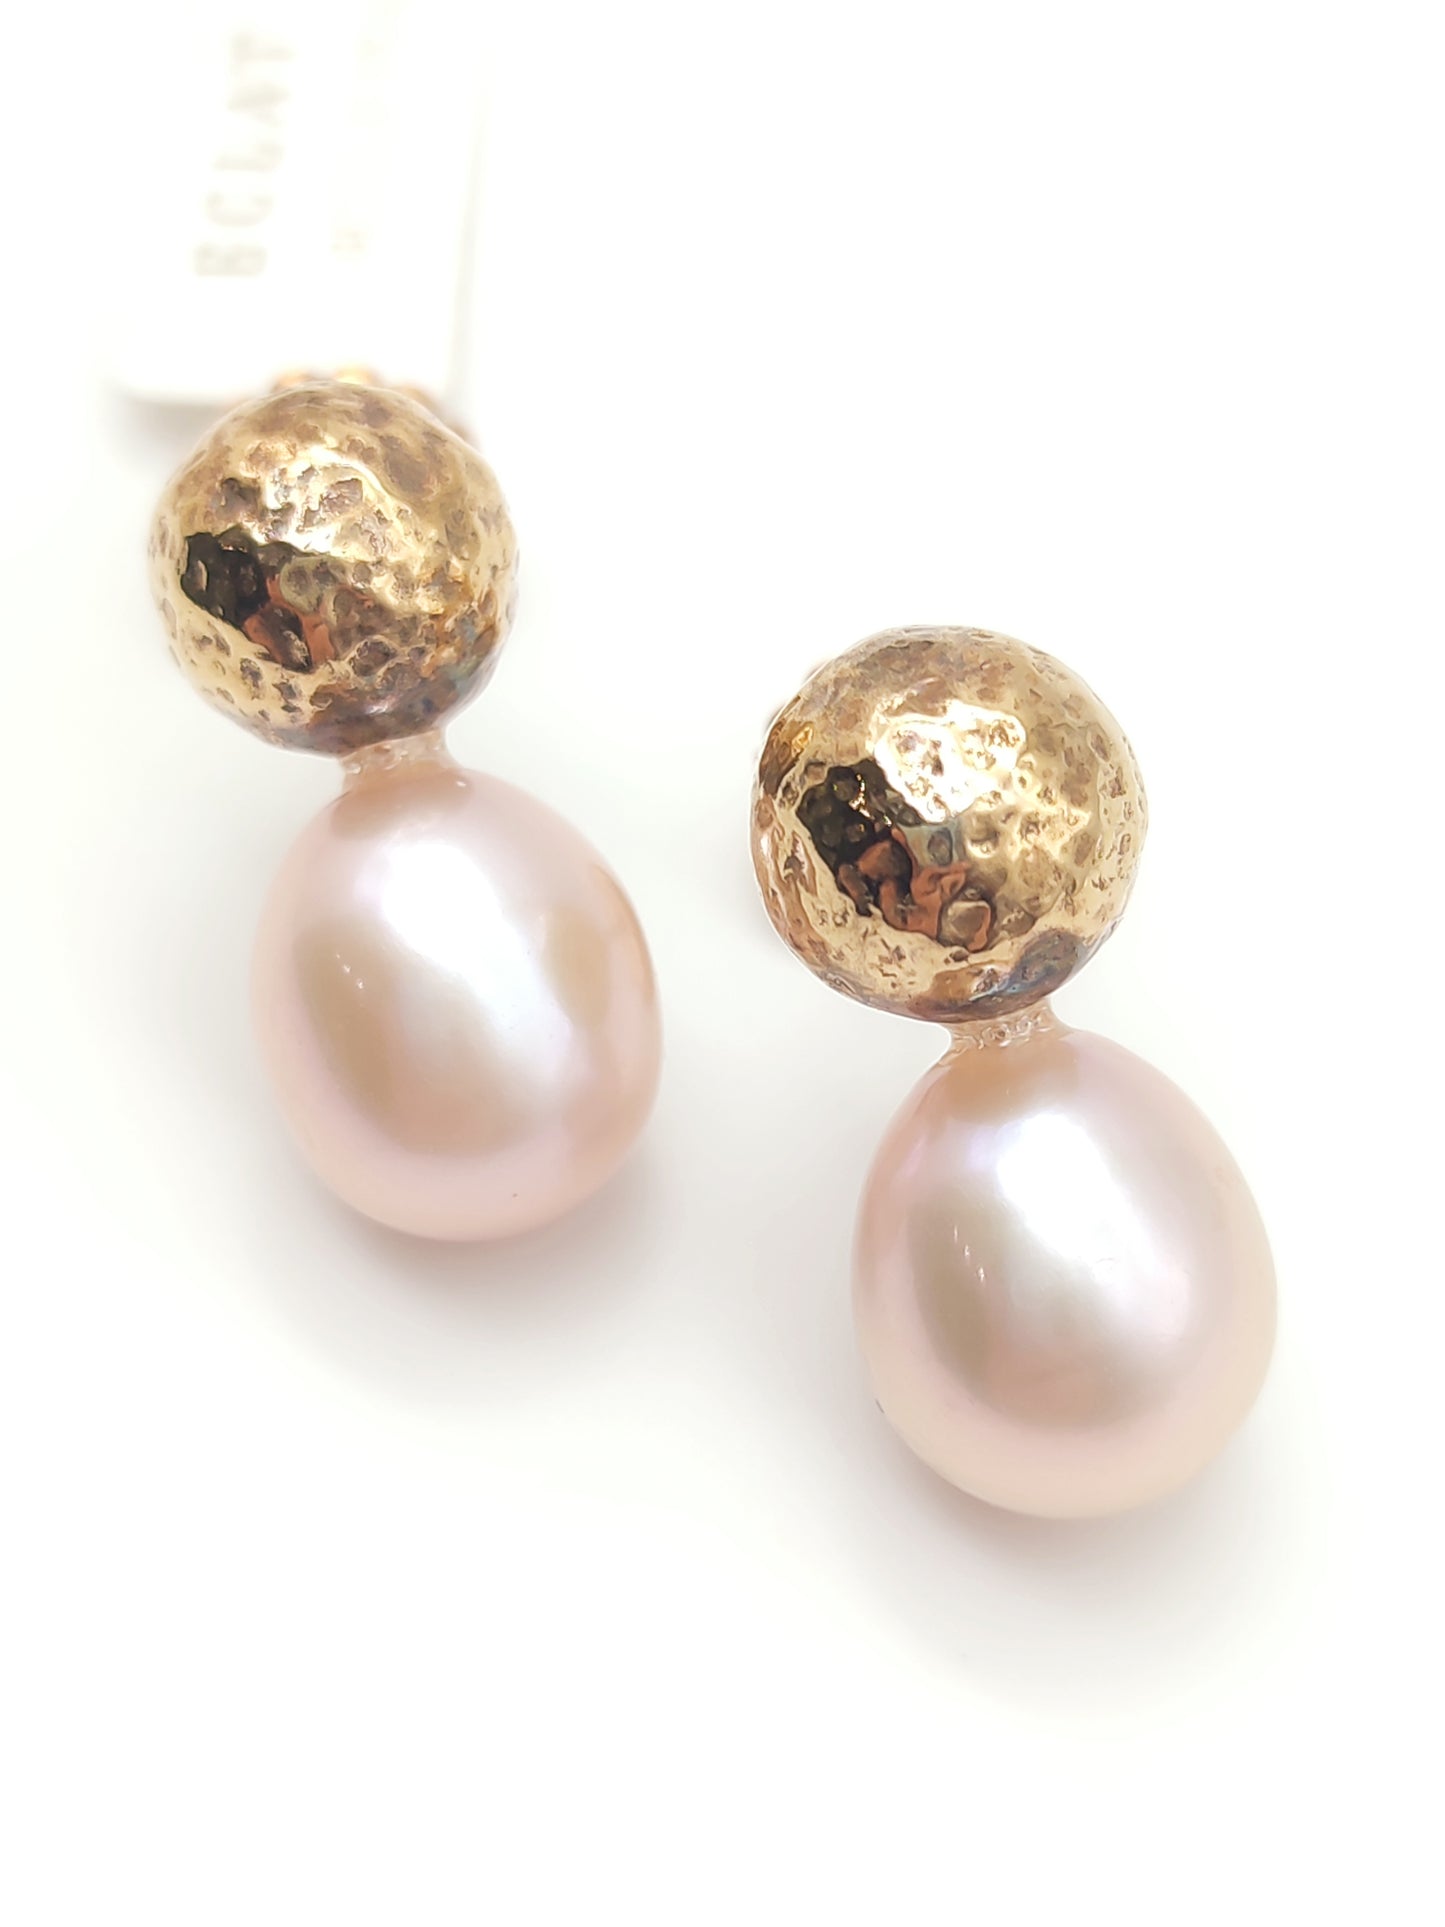 Silver earrings with Eclat pearls